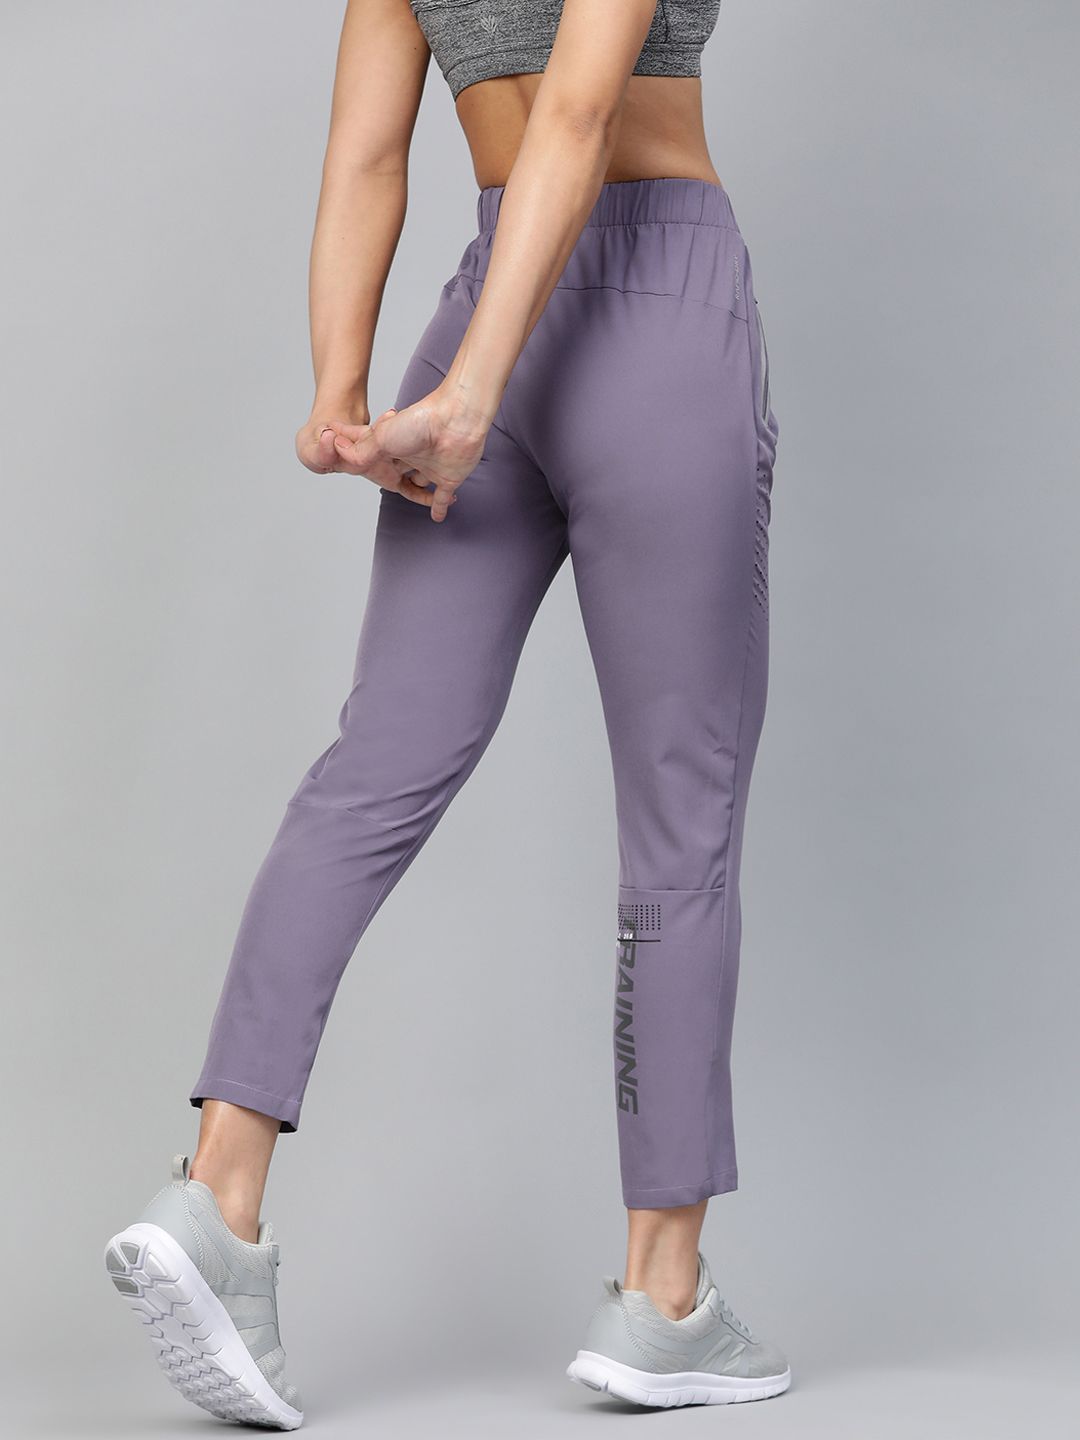 HRX by Hrithik Roshan Women Lavender Skinny Fit Colourblocked Yoga Tights -12790428